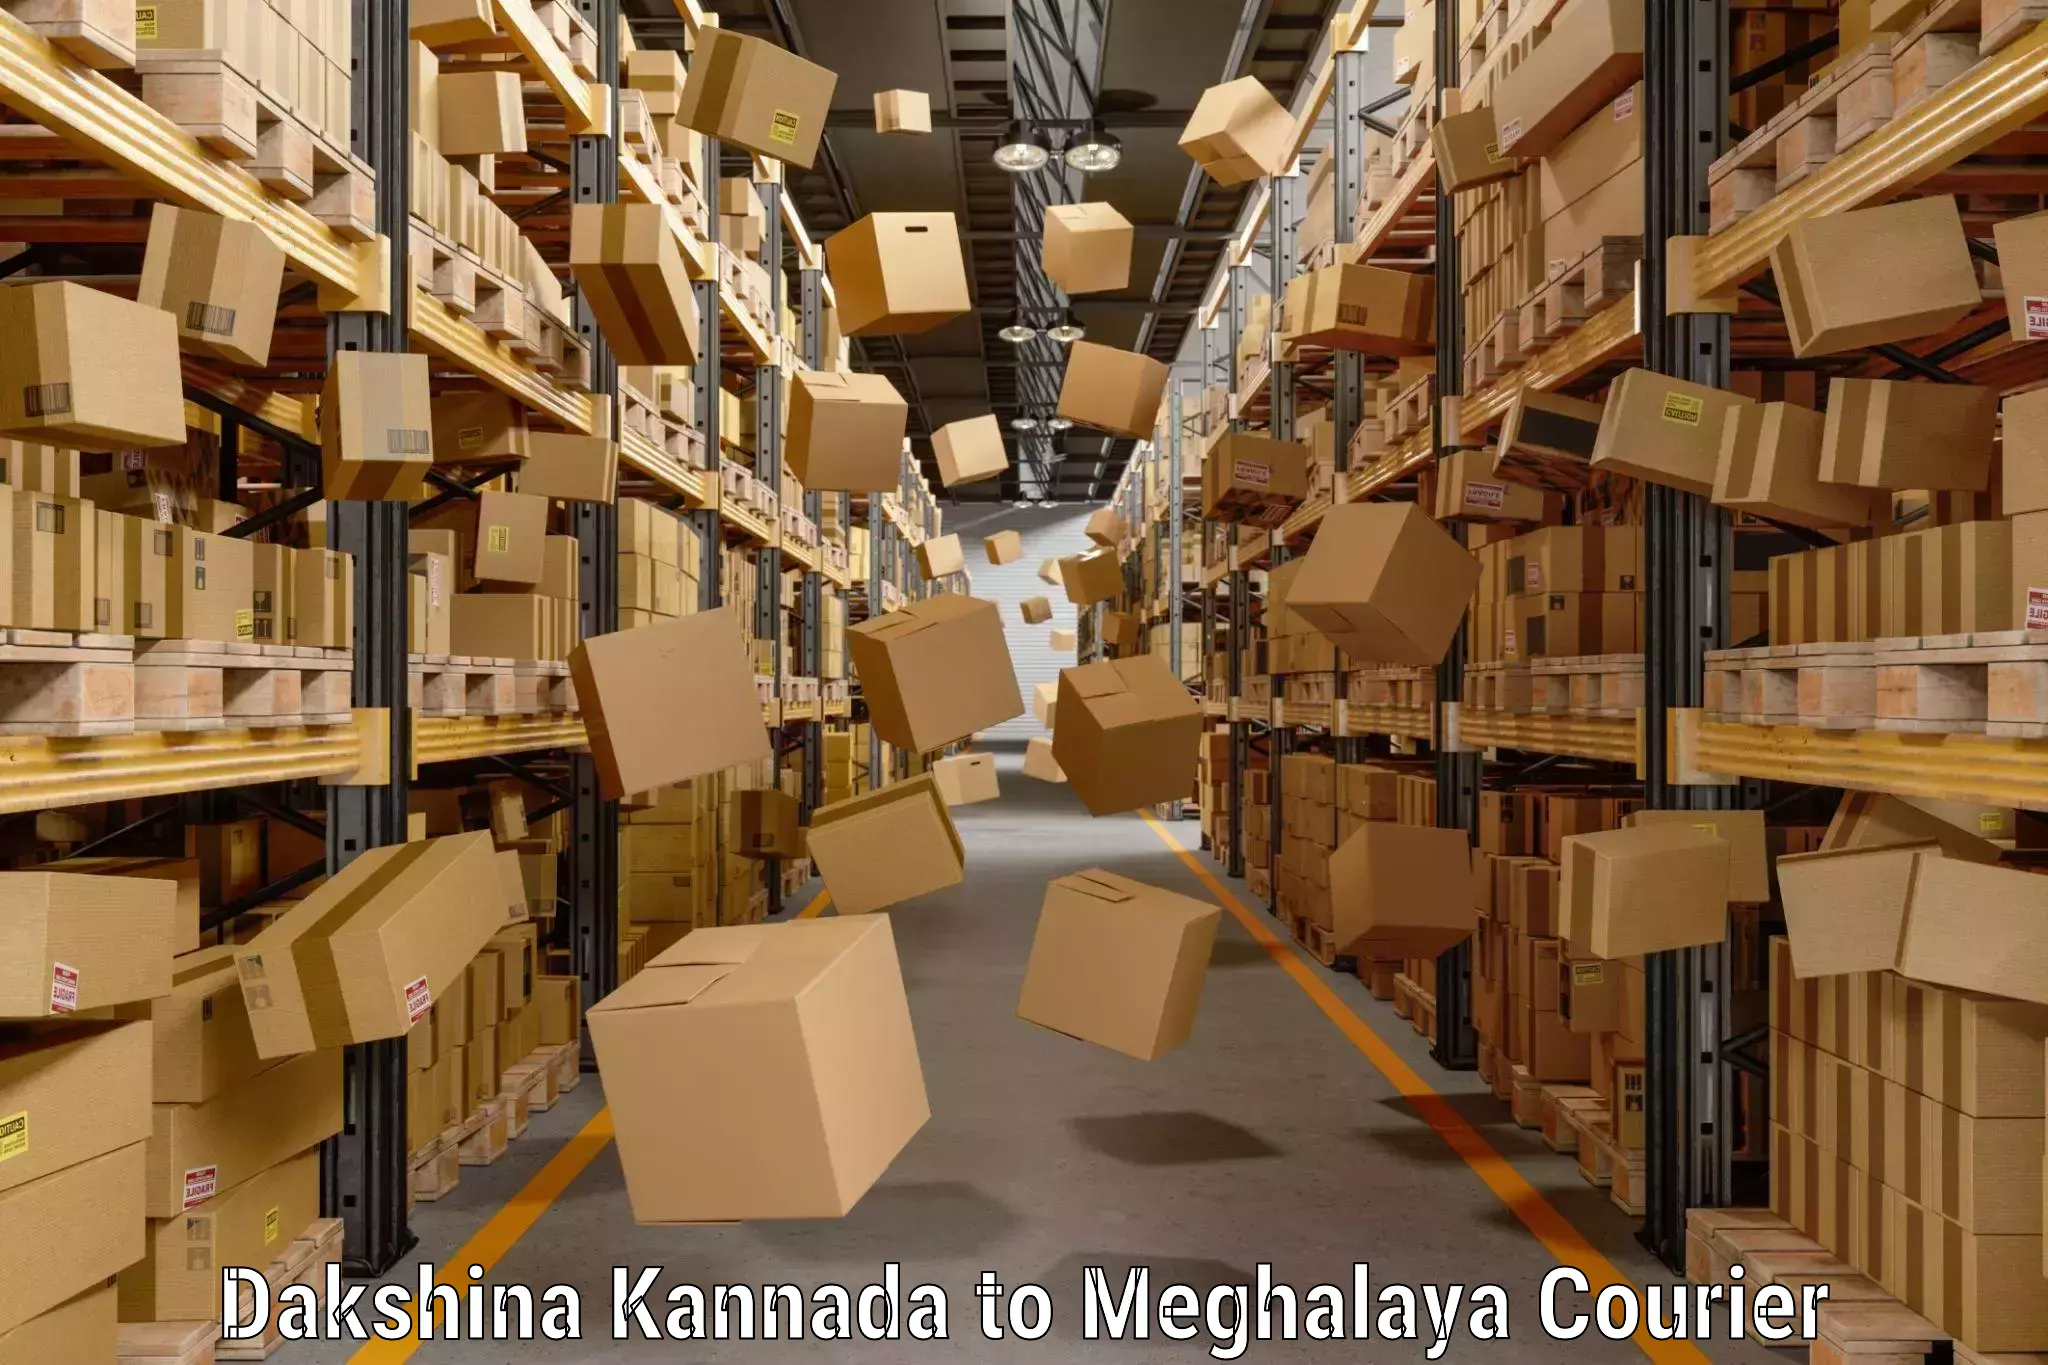 Luggage transport consultancy Dakshina Kannada to Meghalaya